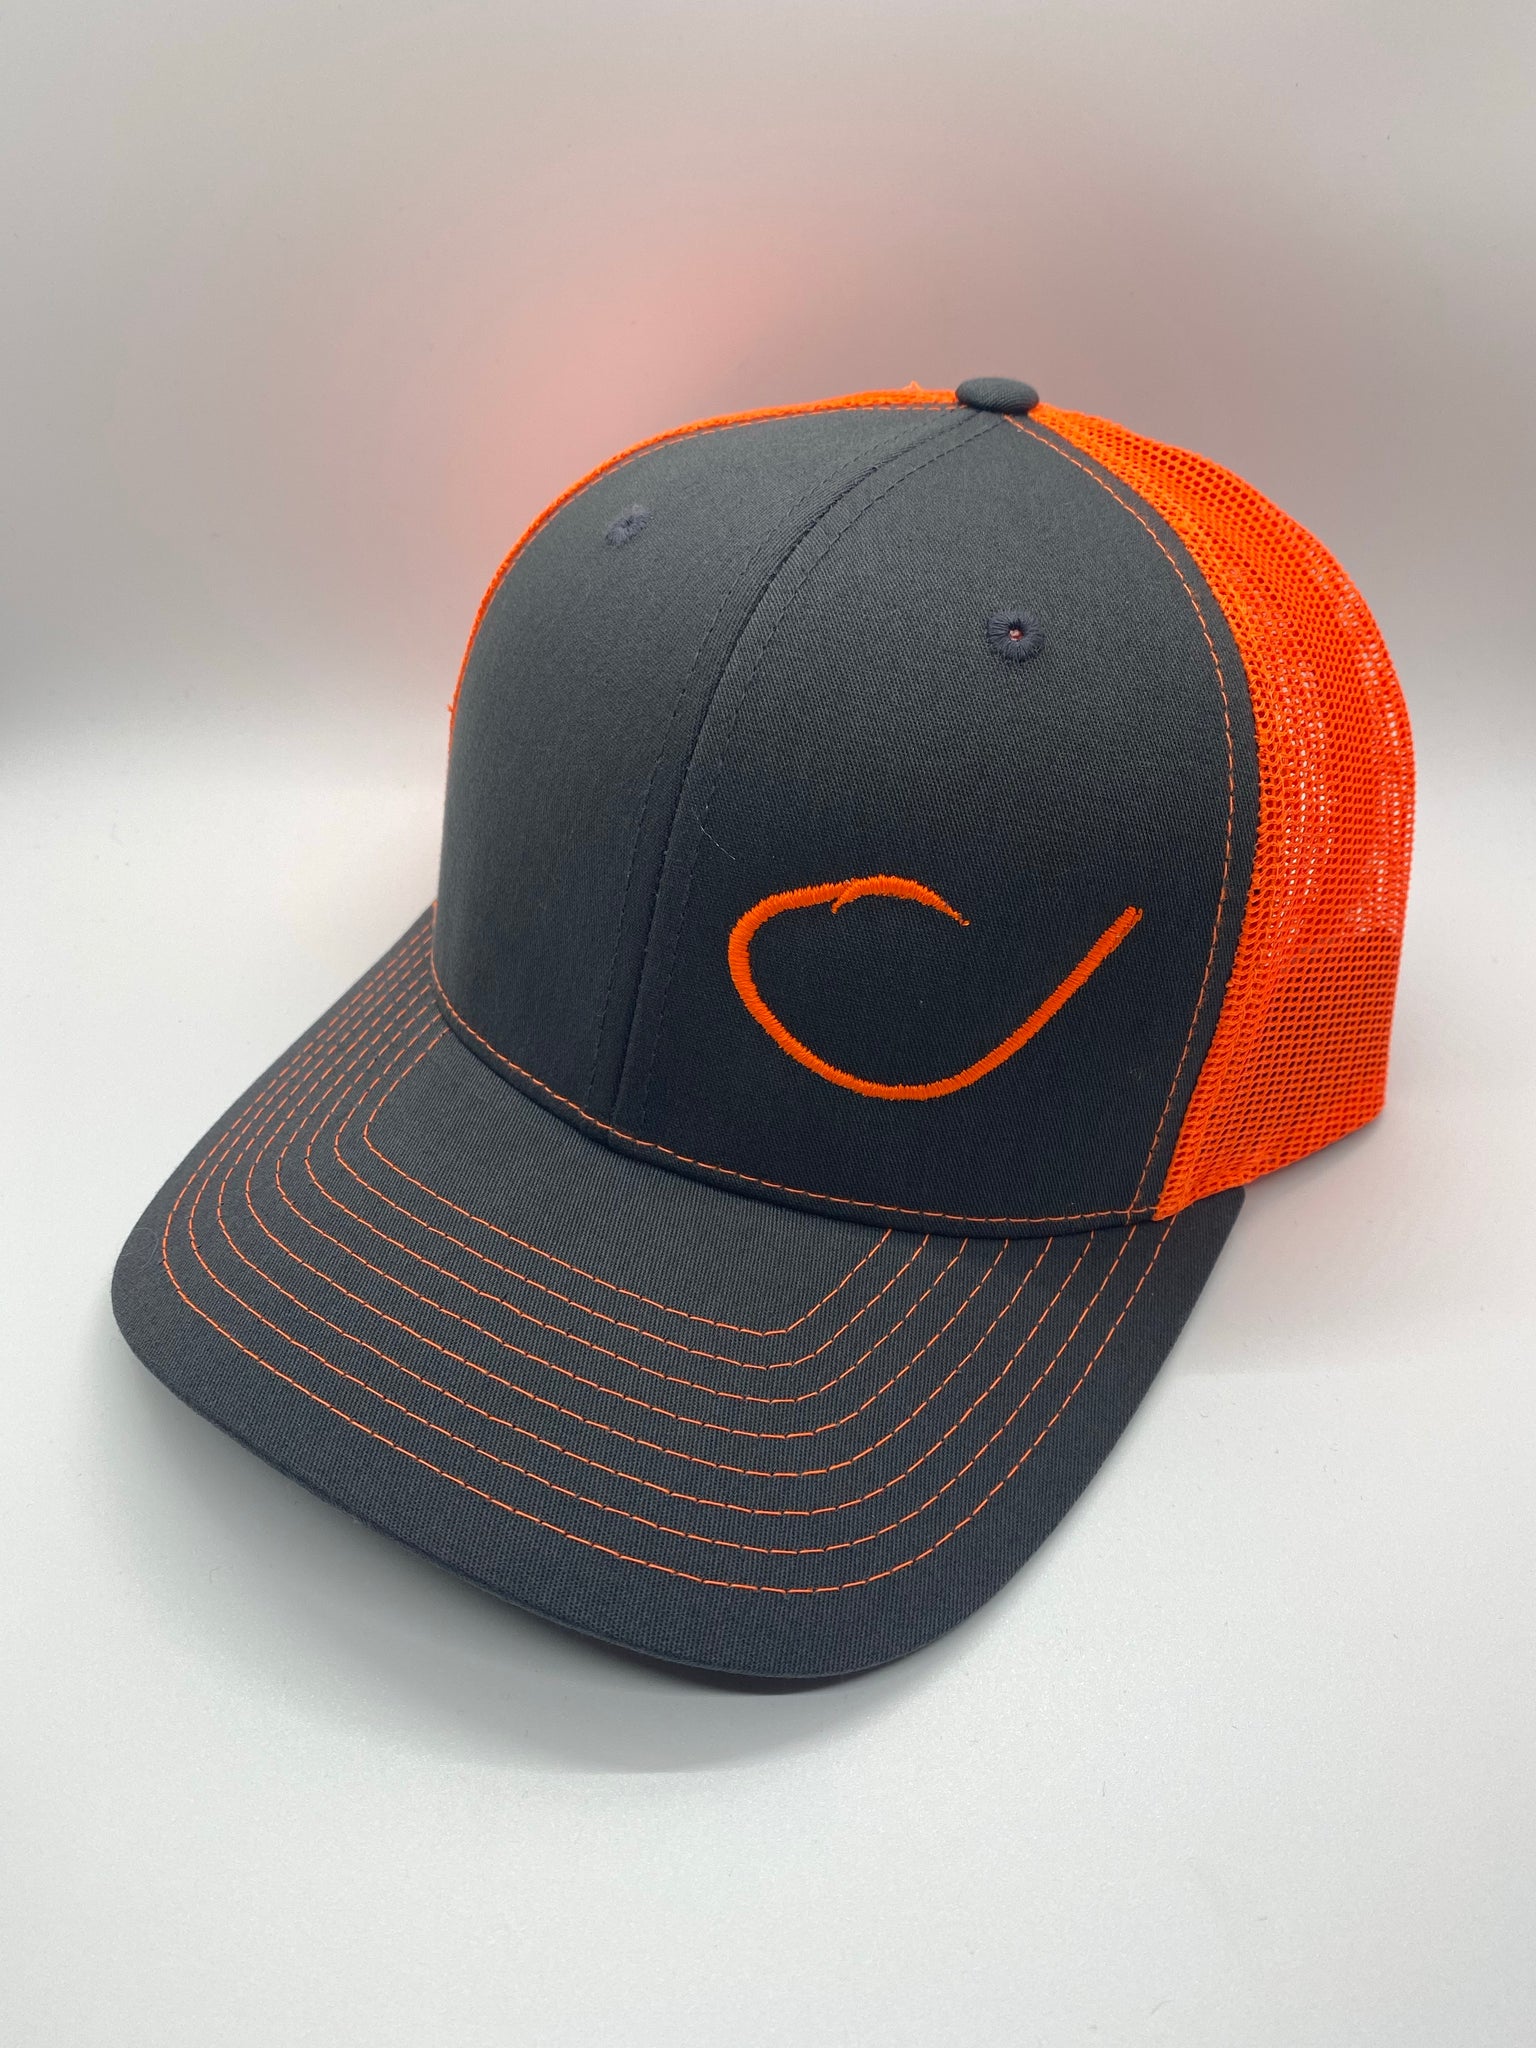 Avid Fishing Gear Fish Hook Trucker Hat Cap Orange Gray Mesh Adjustable